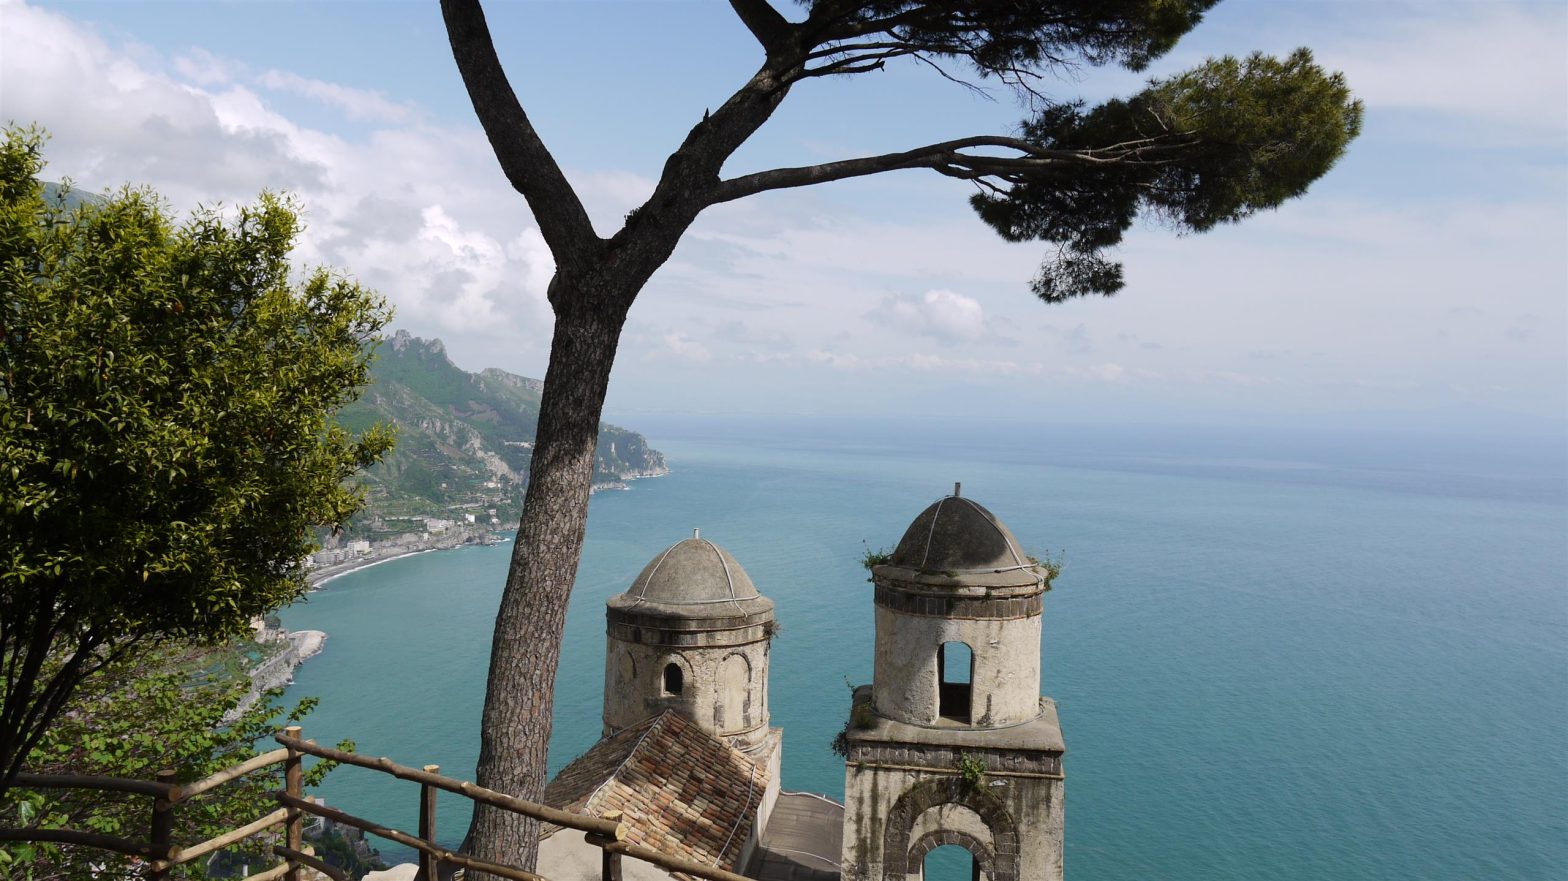 Blick auf die Amalfi Küste, Villa Rufolo